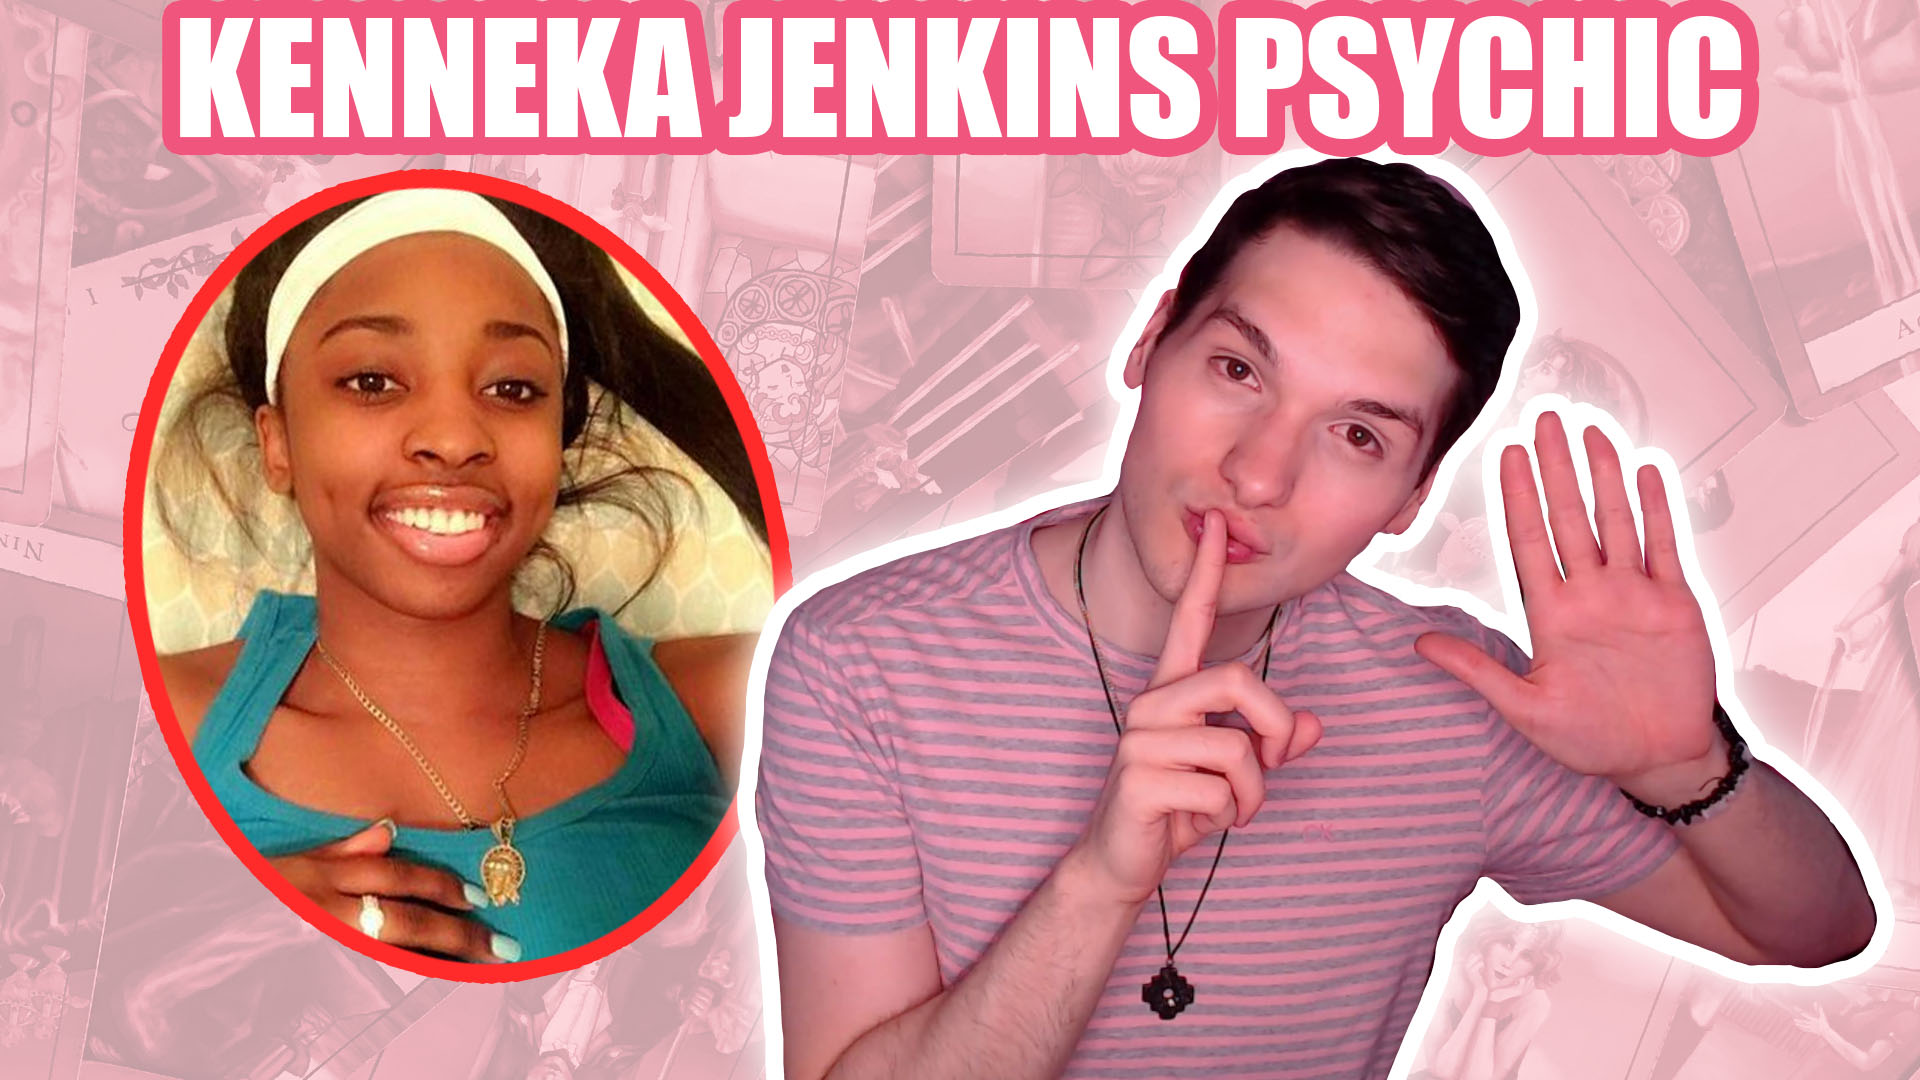 Kenneka Jenkins Psychic